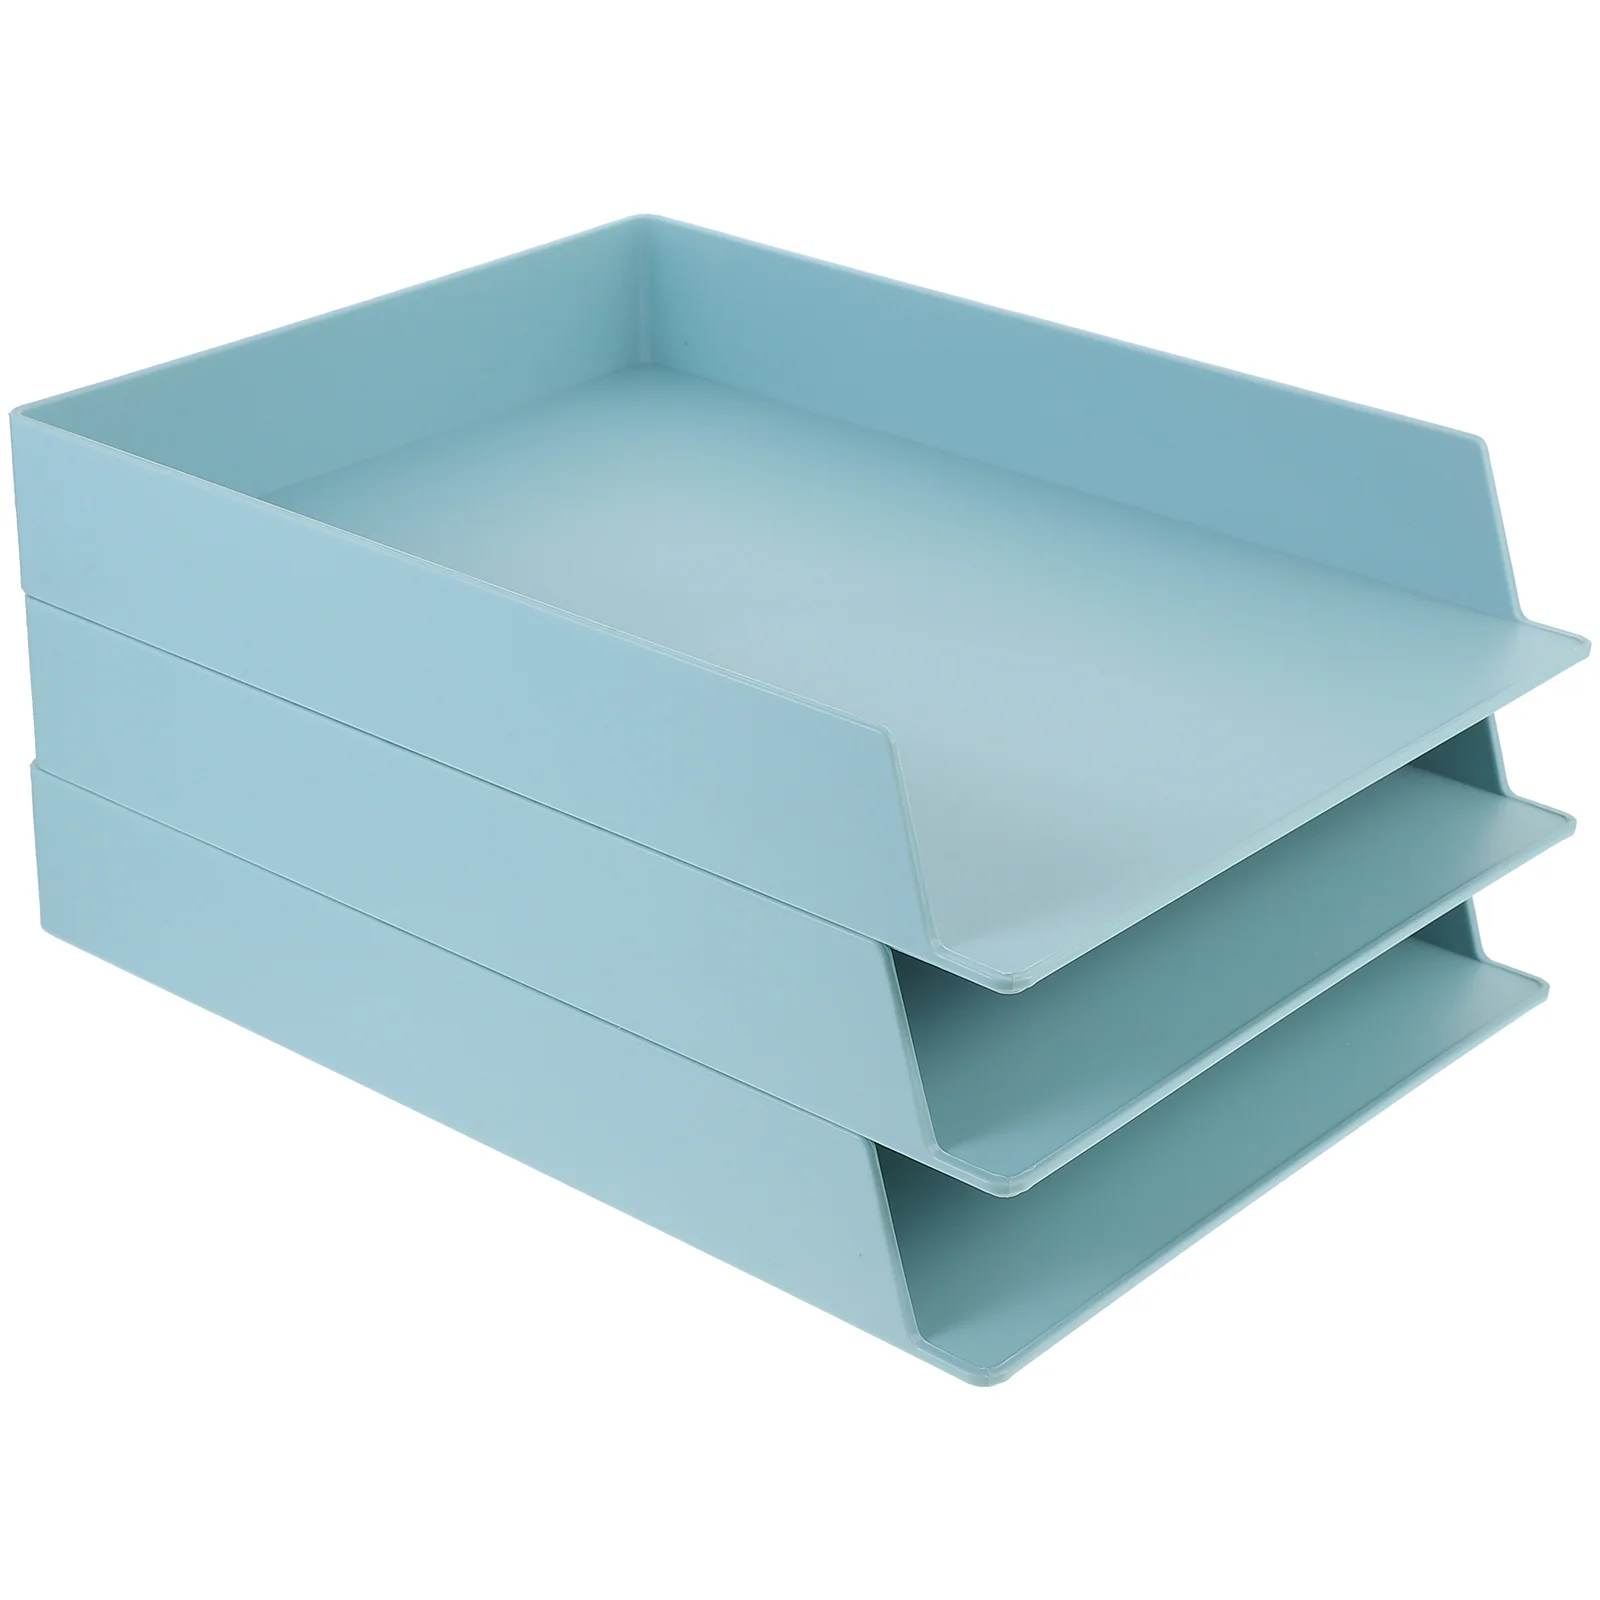 

3 Pcs Desktop Organizers File Box Stationery Container Student Document Desktop Shelf Rack Office Holder Supply